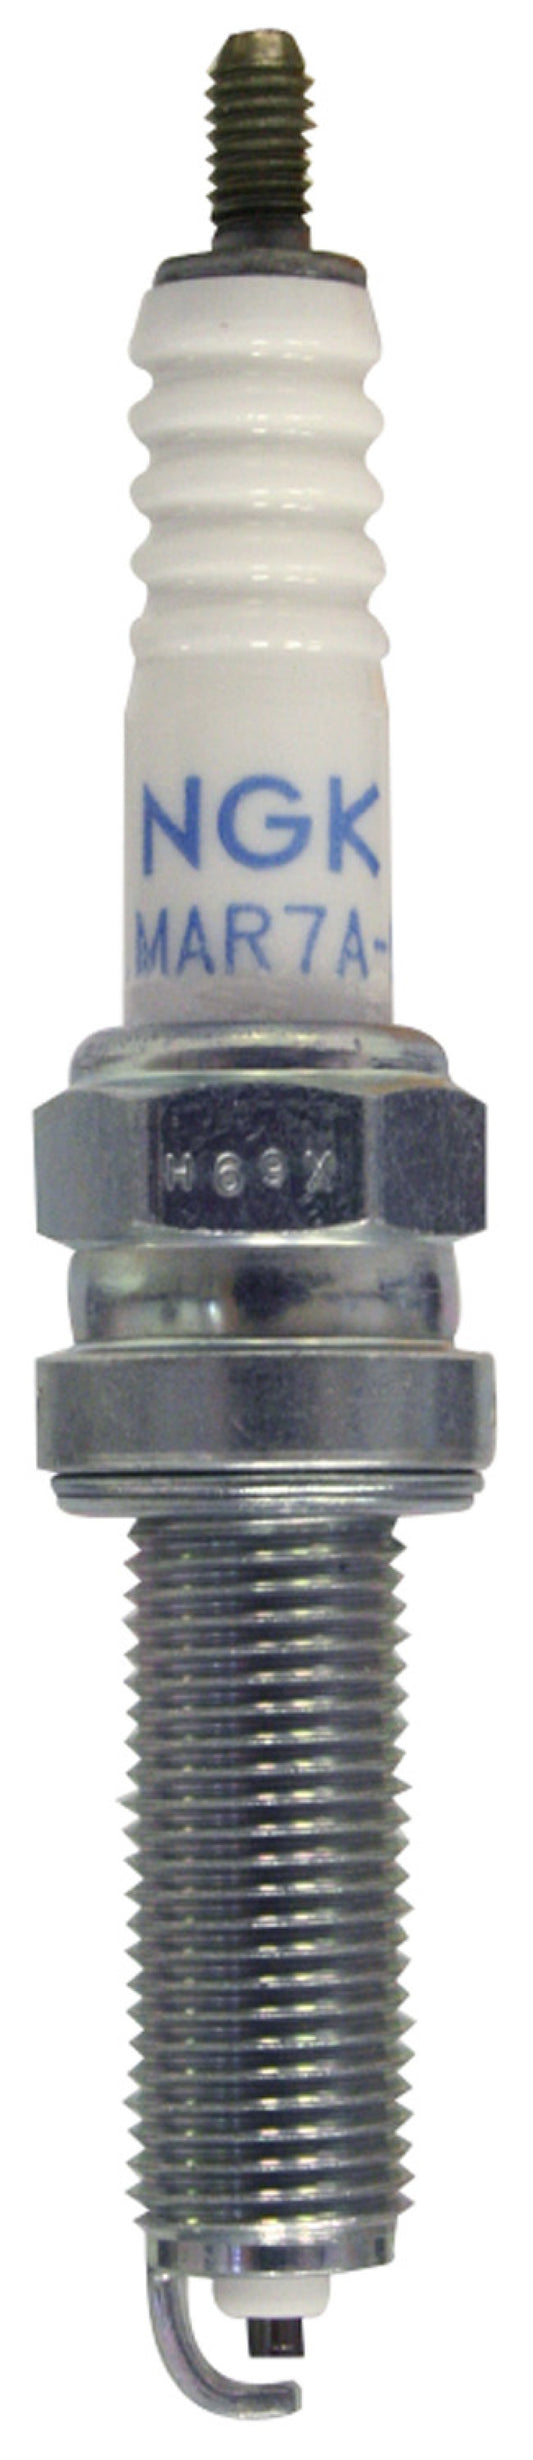 NGK Standard Spark Plug Box of 10 (LMAR8A-9S)